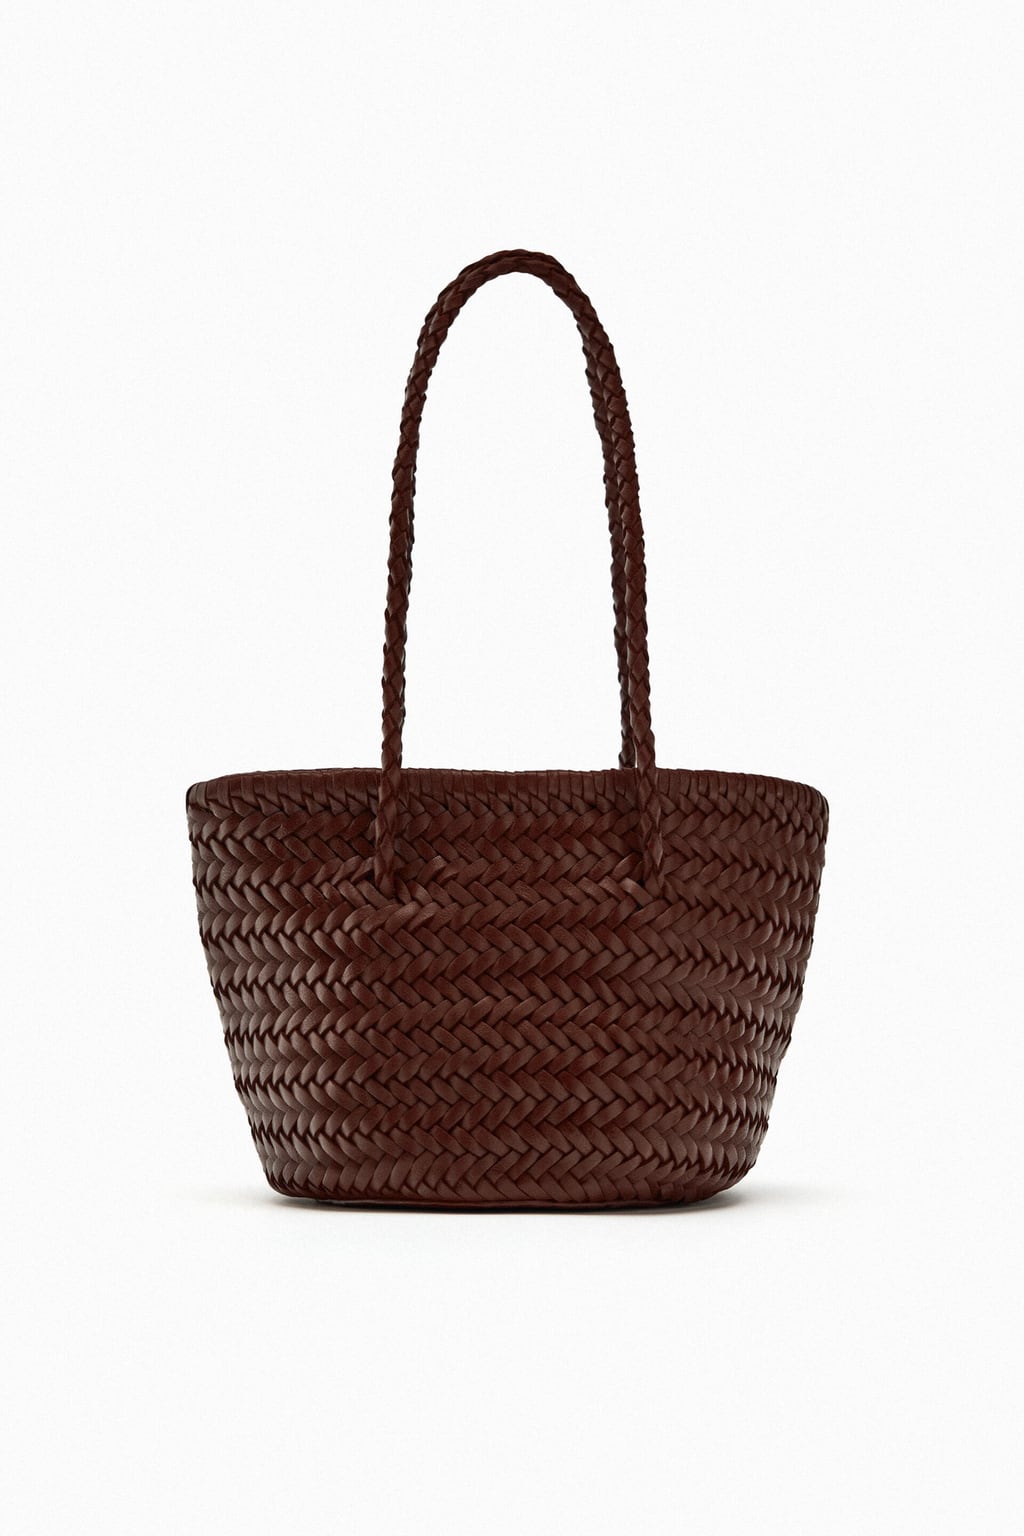 Zara Braided Leather Bag